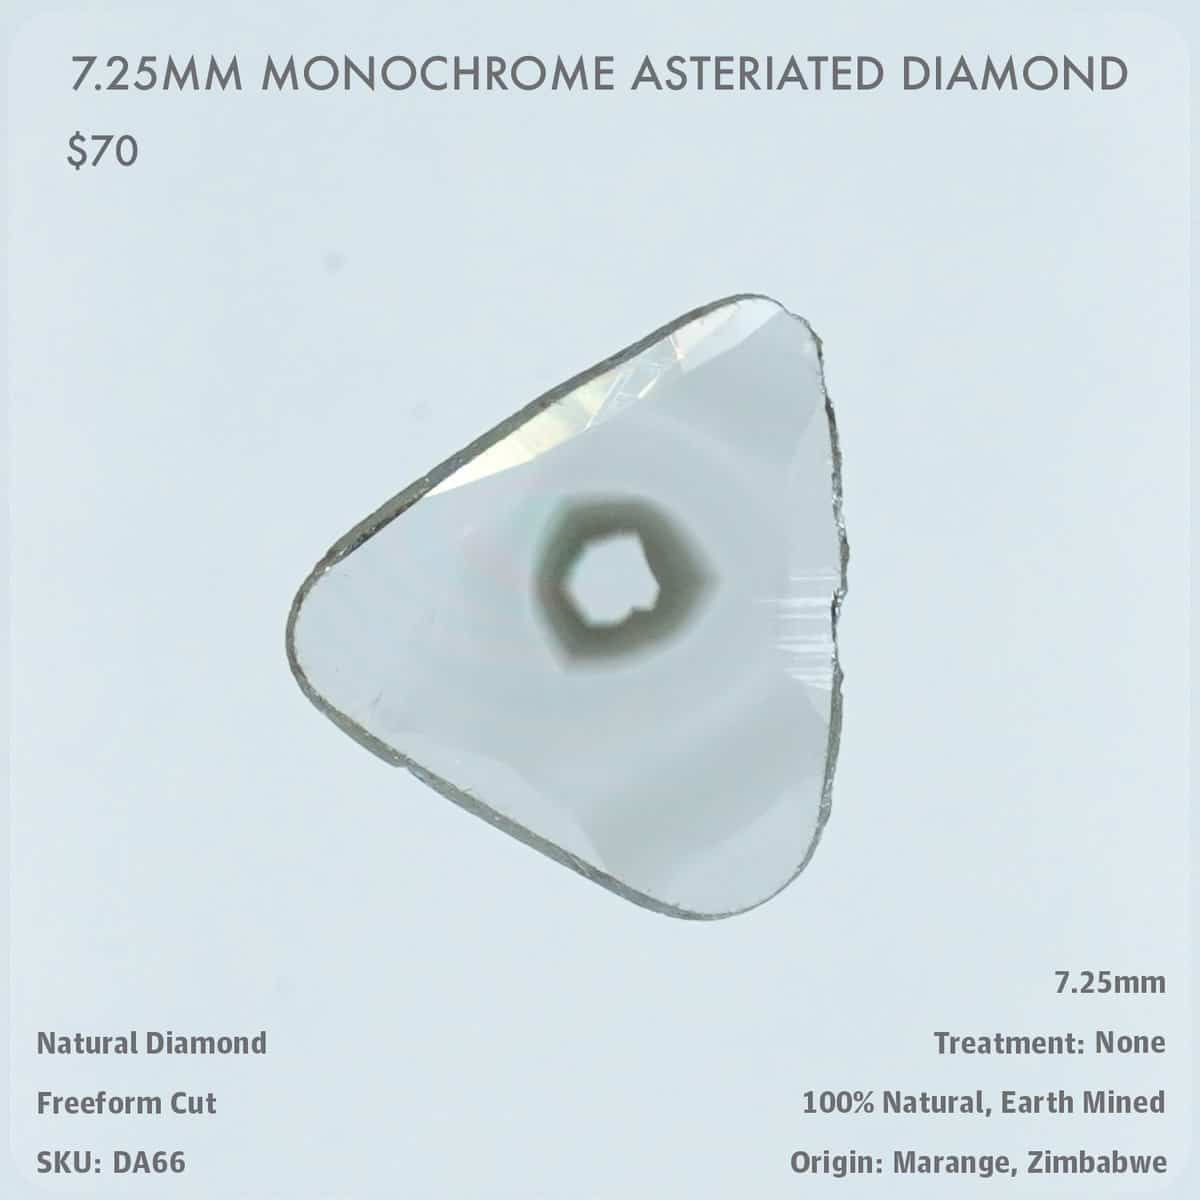 7.25mm Monochrome Asteriated Diamond